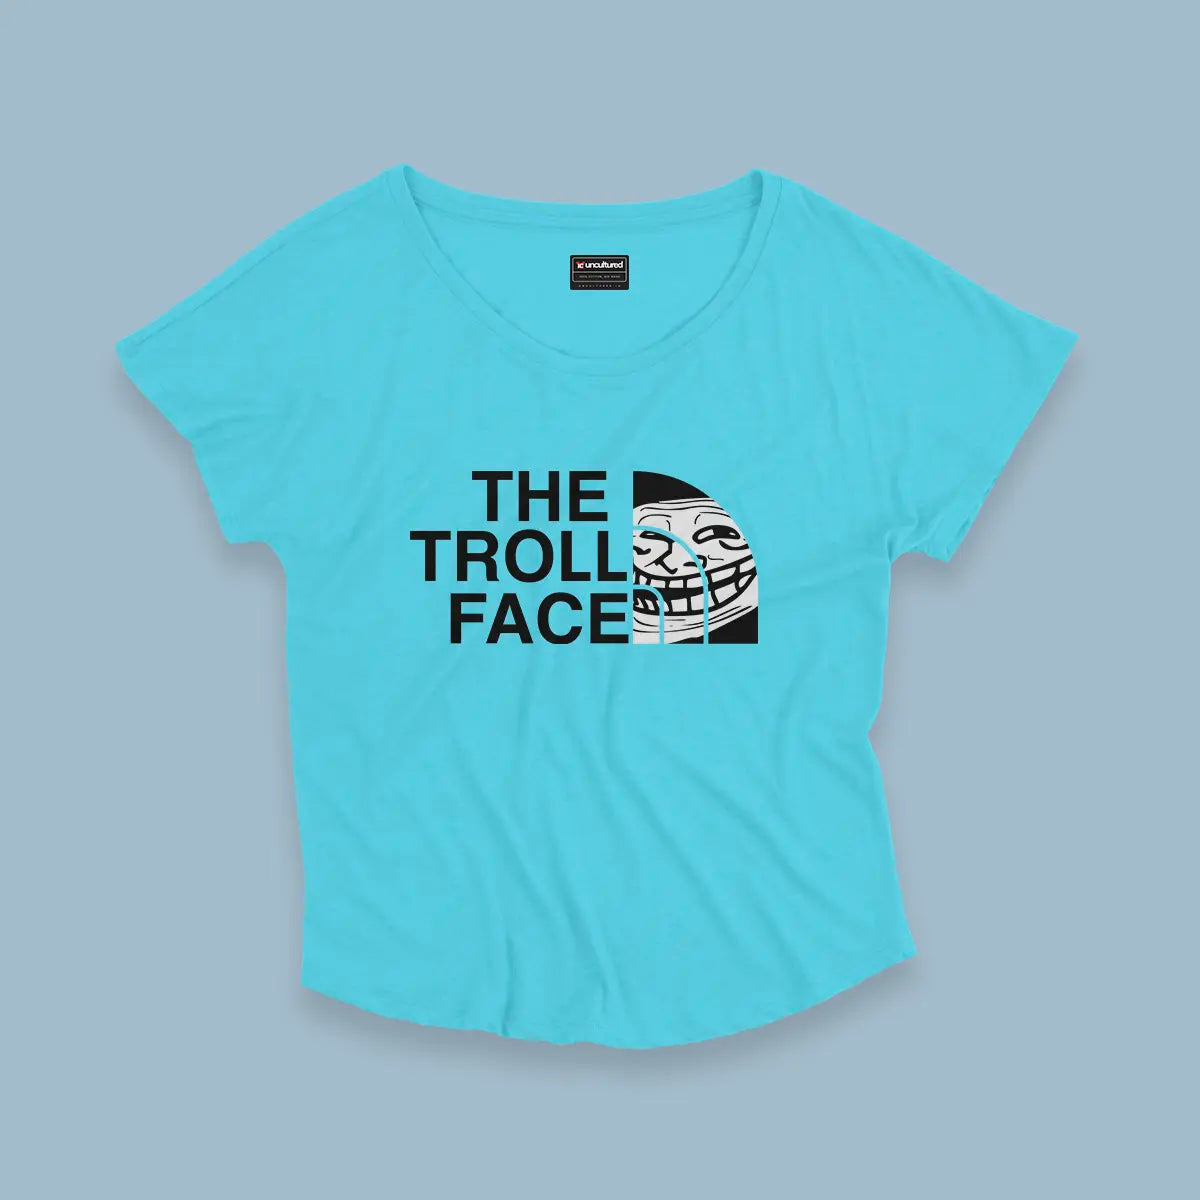 The troll face - Croptop